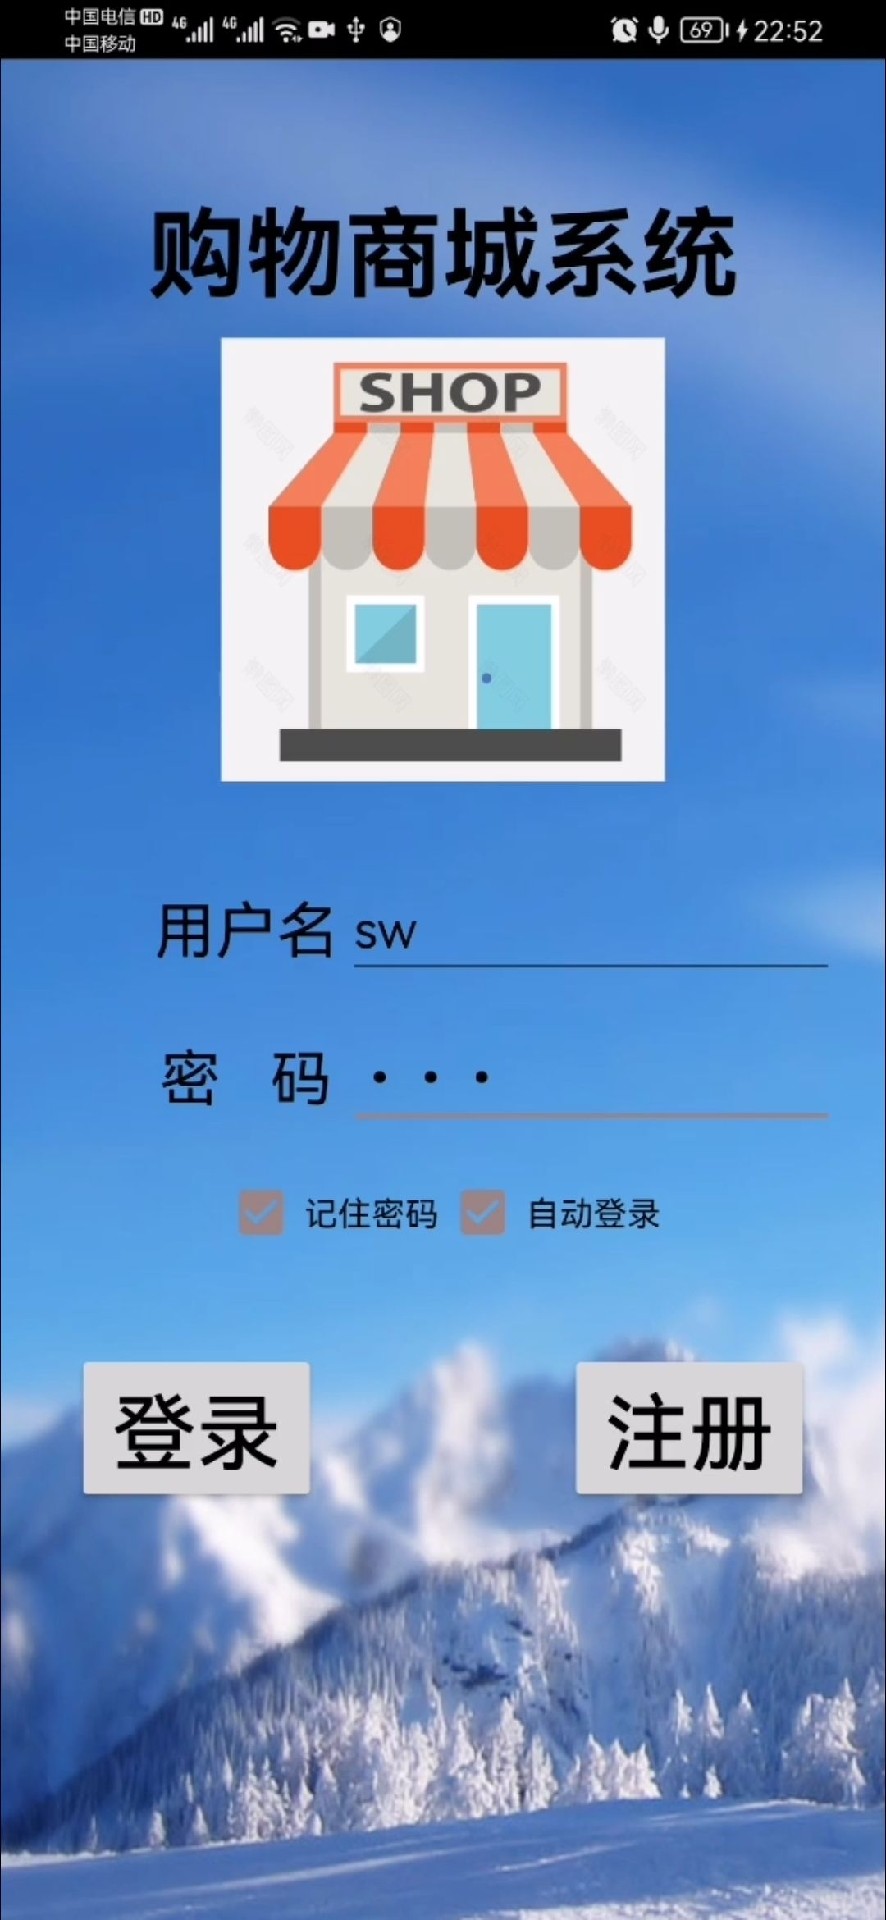 【有文档】安卓Android电子商城/购物商城/网